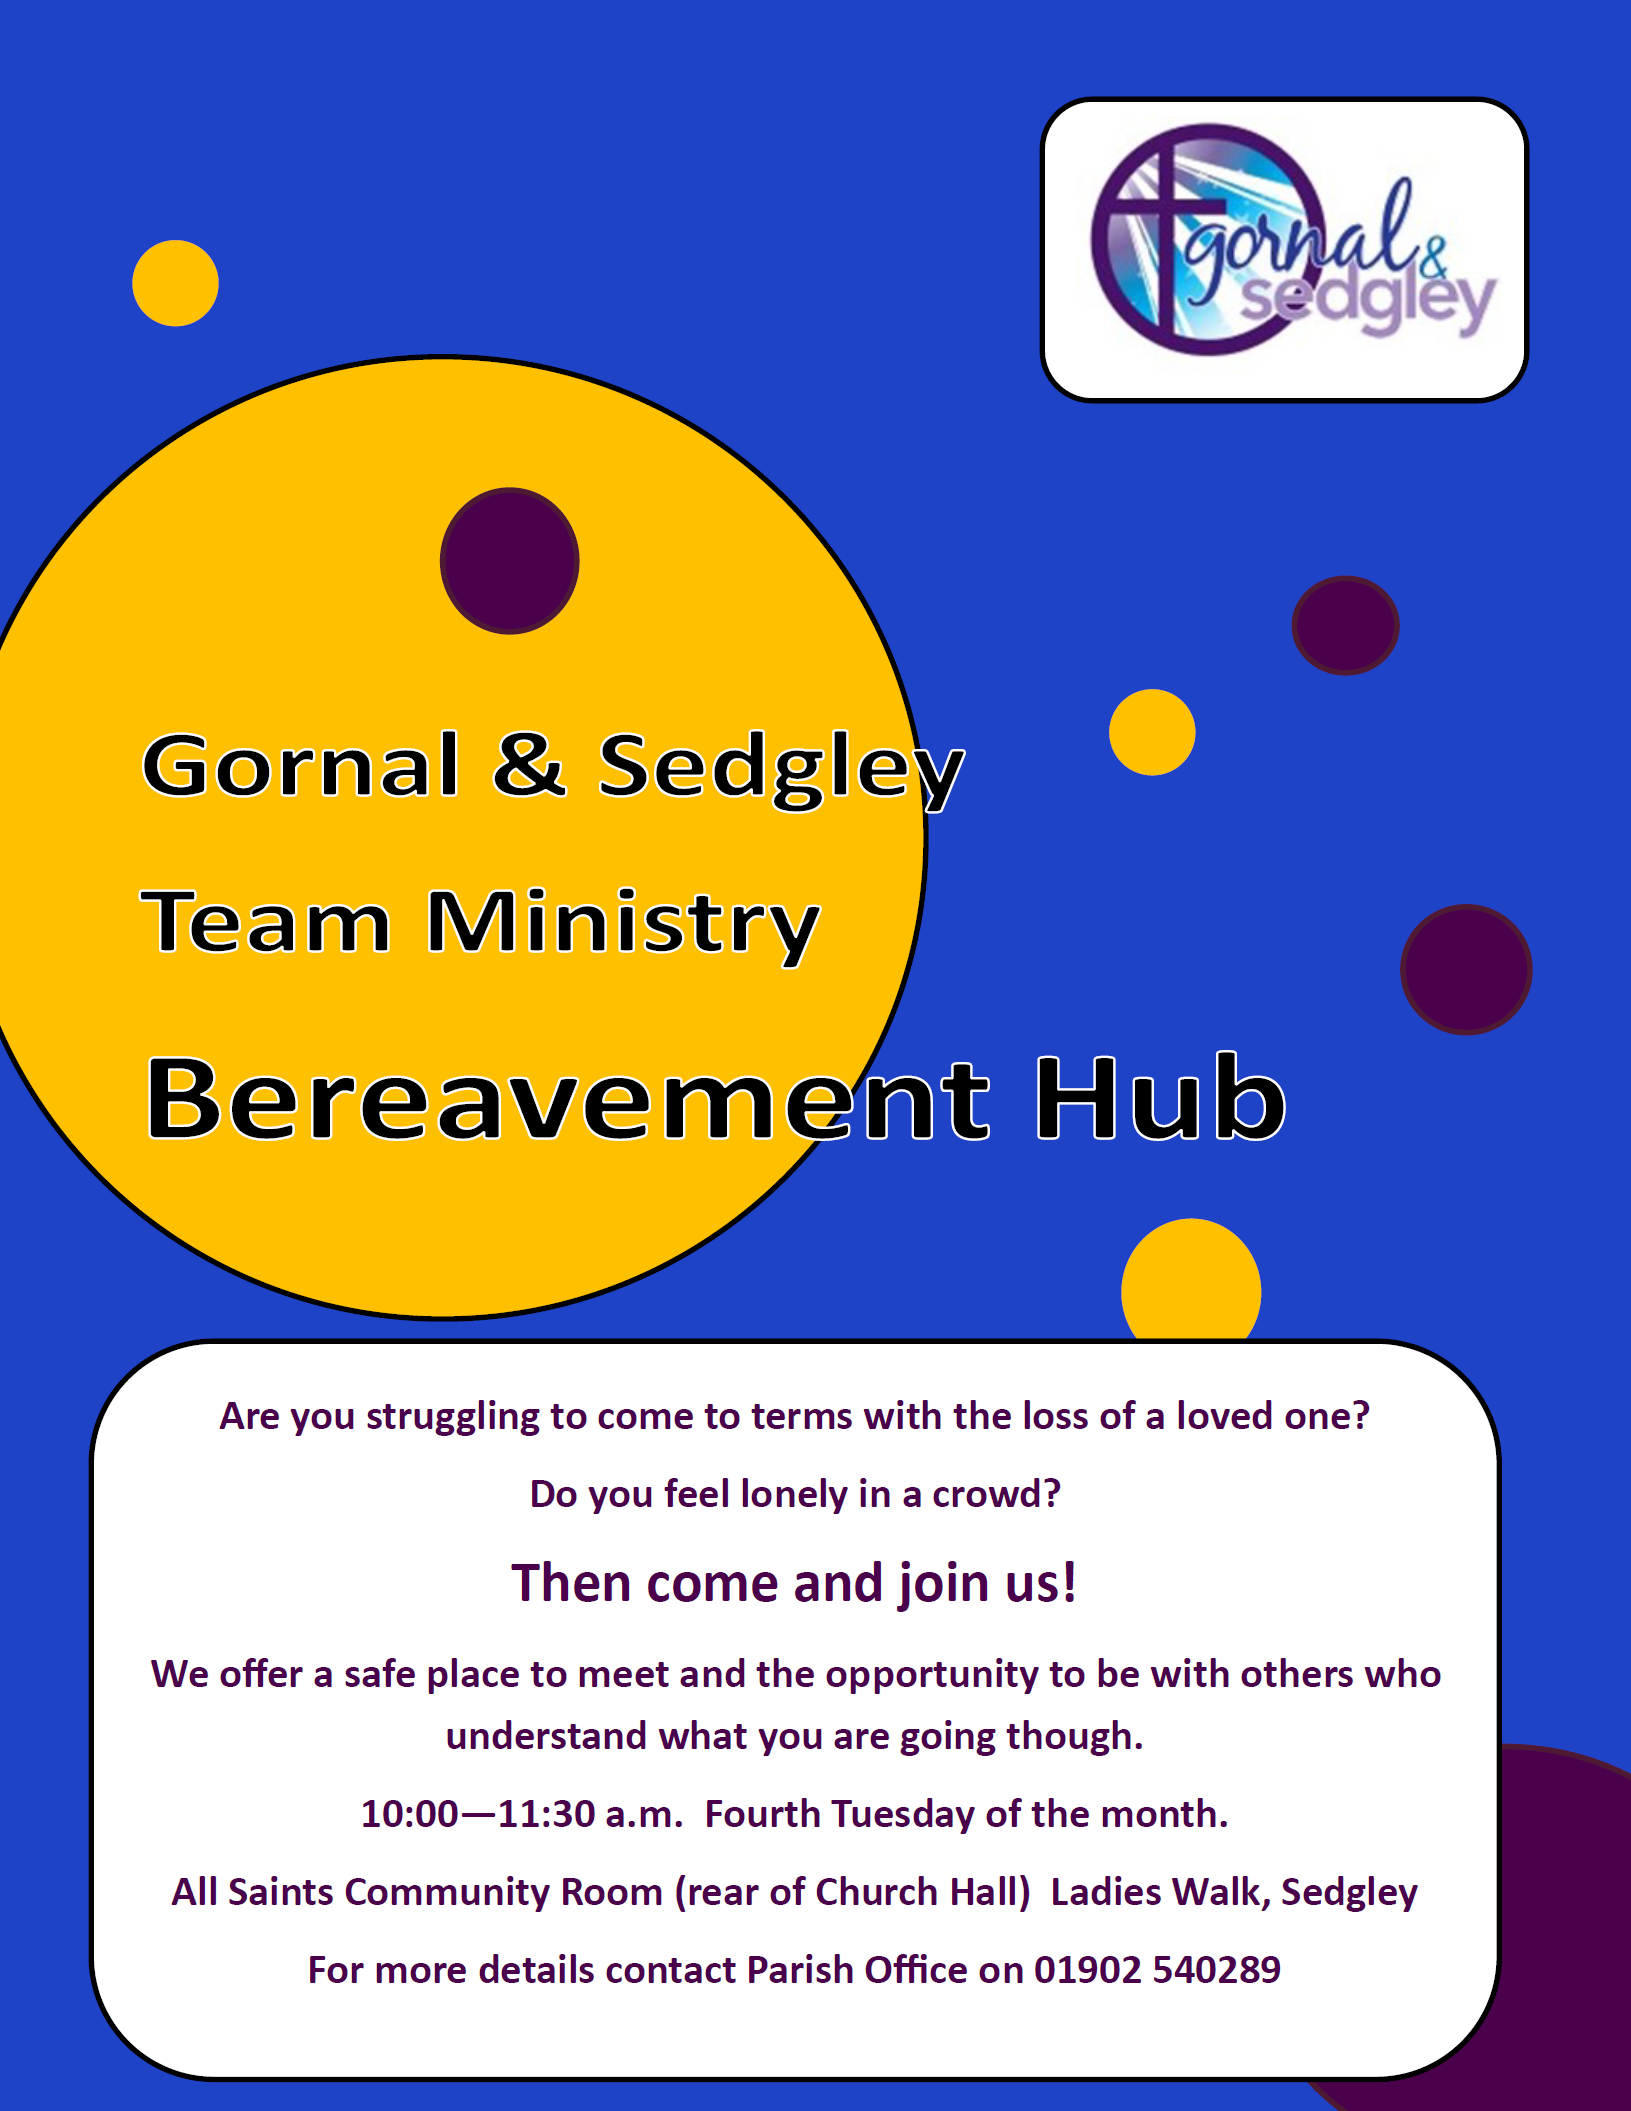 Gornal and Sedgley Team Ministry - Bereavement Hub